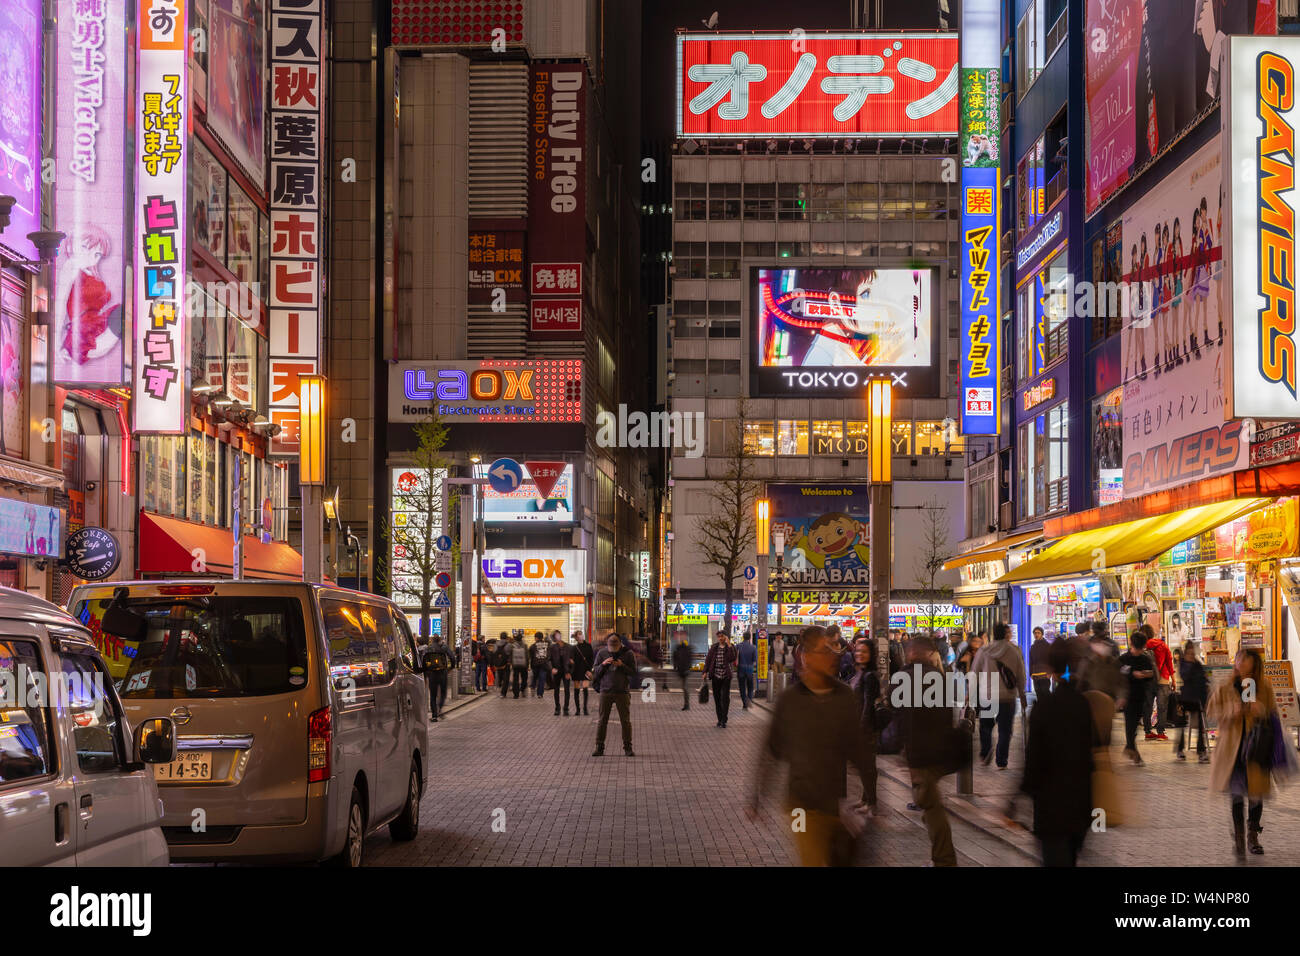 Le futuriste neon night lights de Akihabara Electric Town Shopping district, Tokyo, Japon. Banque D'Images